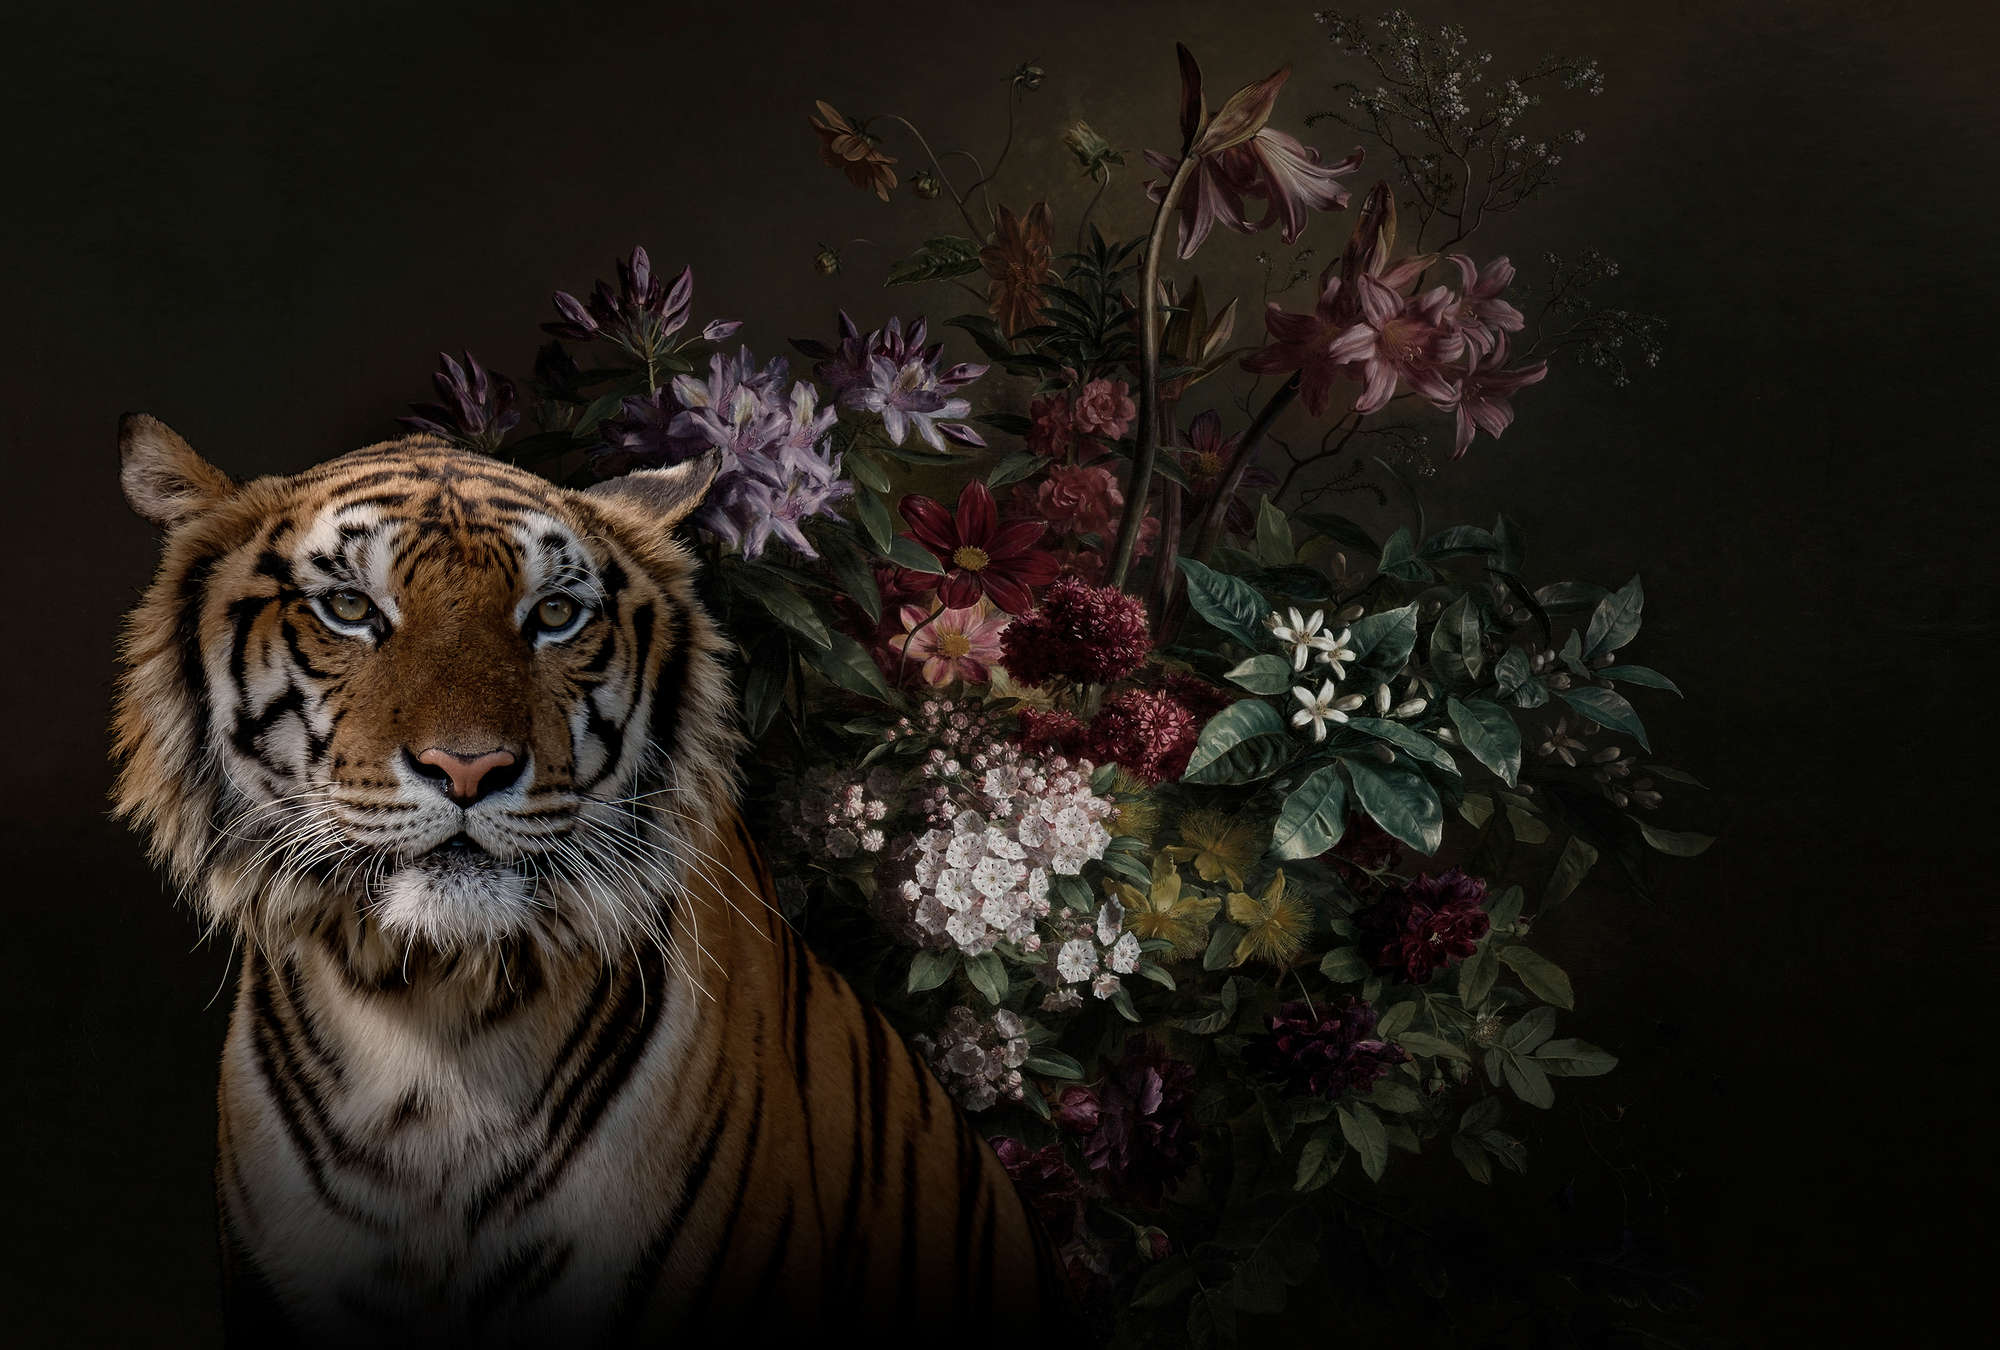             Fototapete Tiger Portrait mit Blumen – Walls by Patel
        